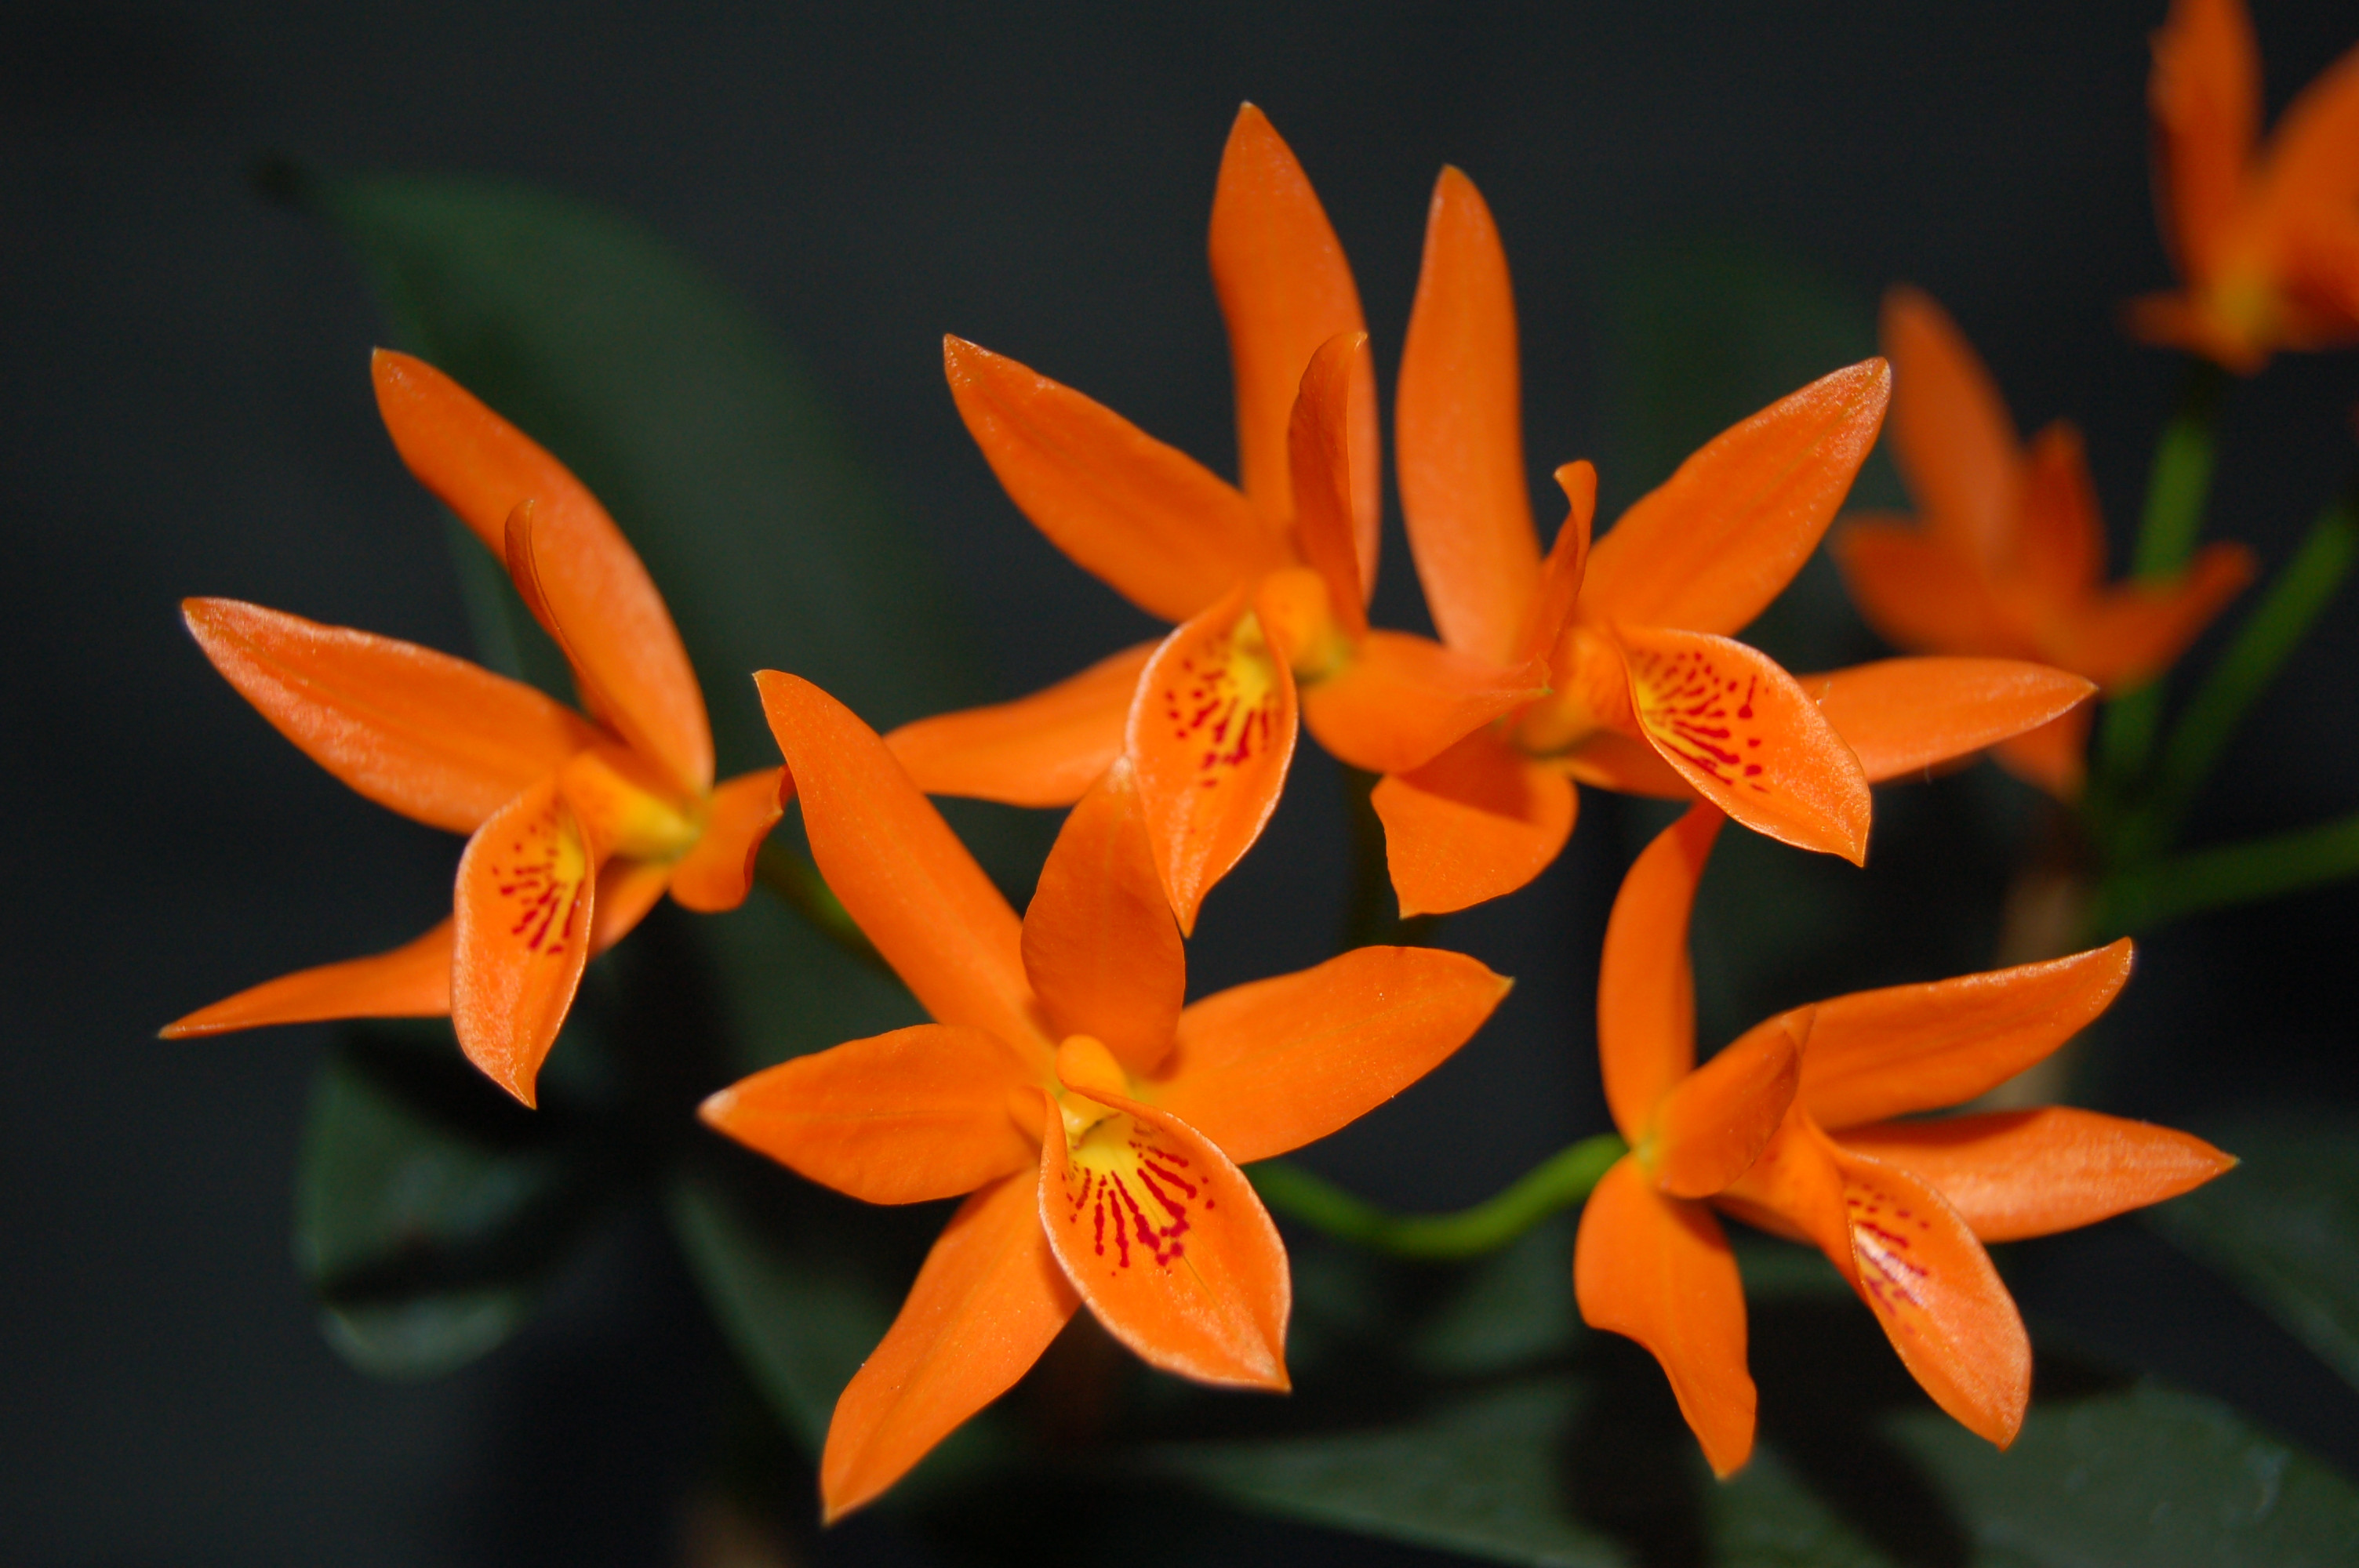 Cattleya aurantiaca 'Miami' (Jgpfl.) | Orchideen-Wichmann.de - Highest  horticultural quality and experience since 1897